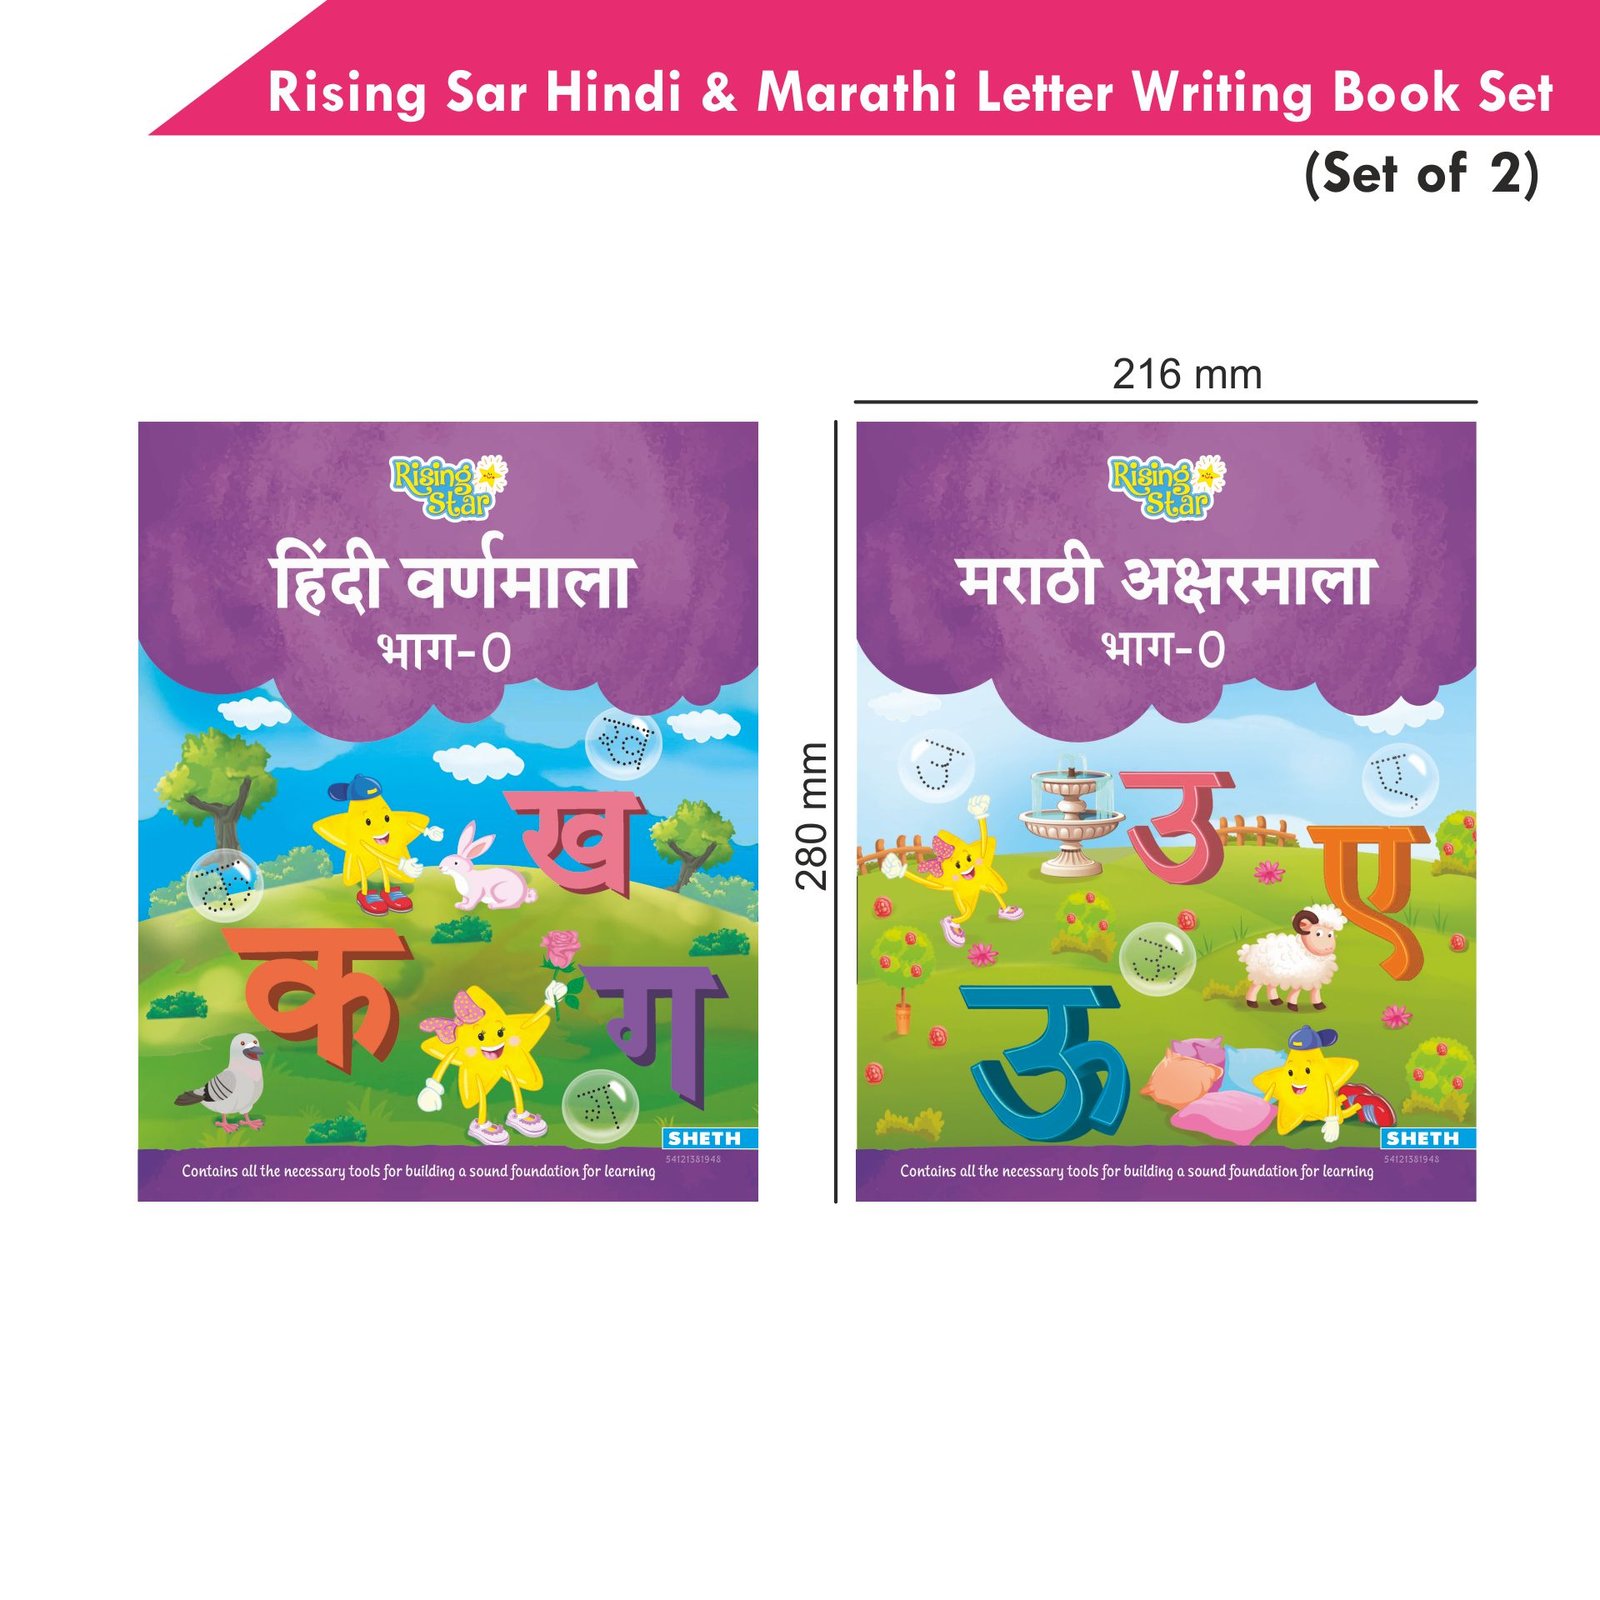 Rising Sar Hindi and Marathi Letter Writing Book Set Set of 2 2